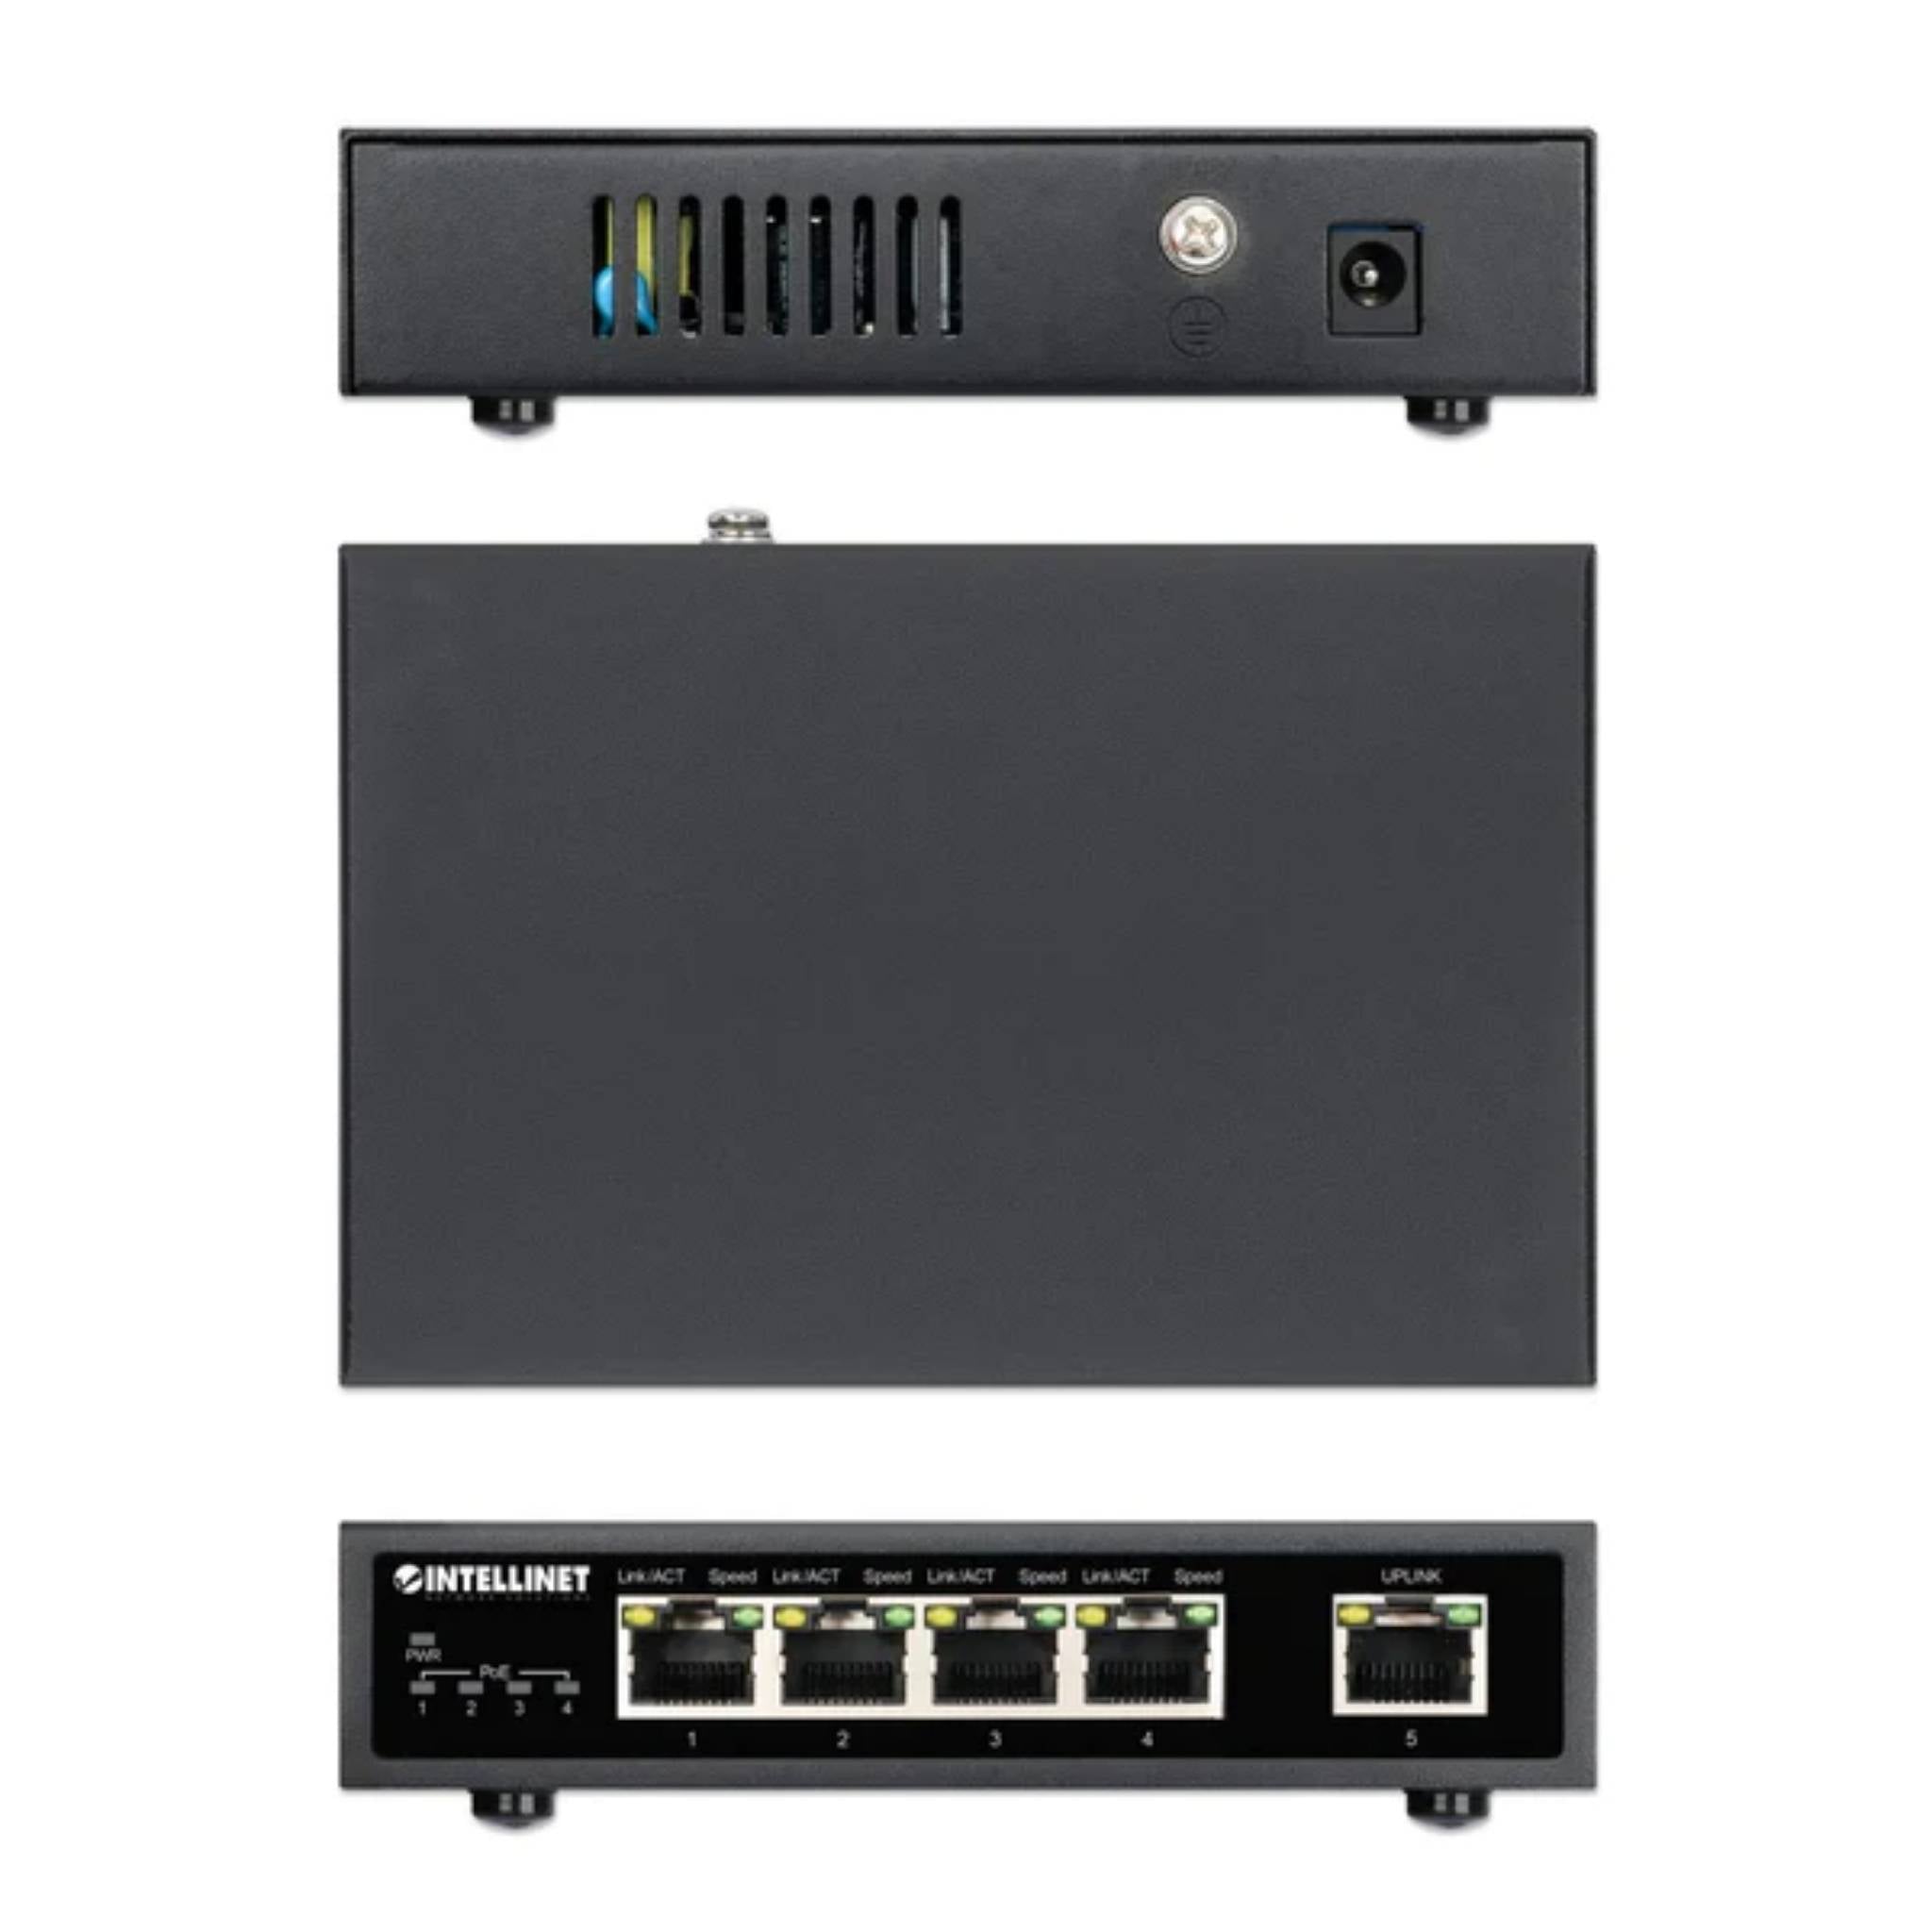 [561839] 5-Port Gigabit Ethernet PoE+ Switch Four PSE PoE Ports, IEEE 802.3at/af (PoE+/PoE) Compliant, PoE Power Budget up to 62 W, Desktop Format